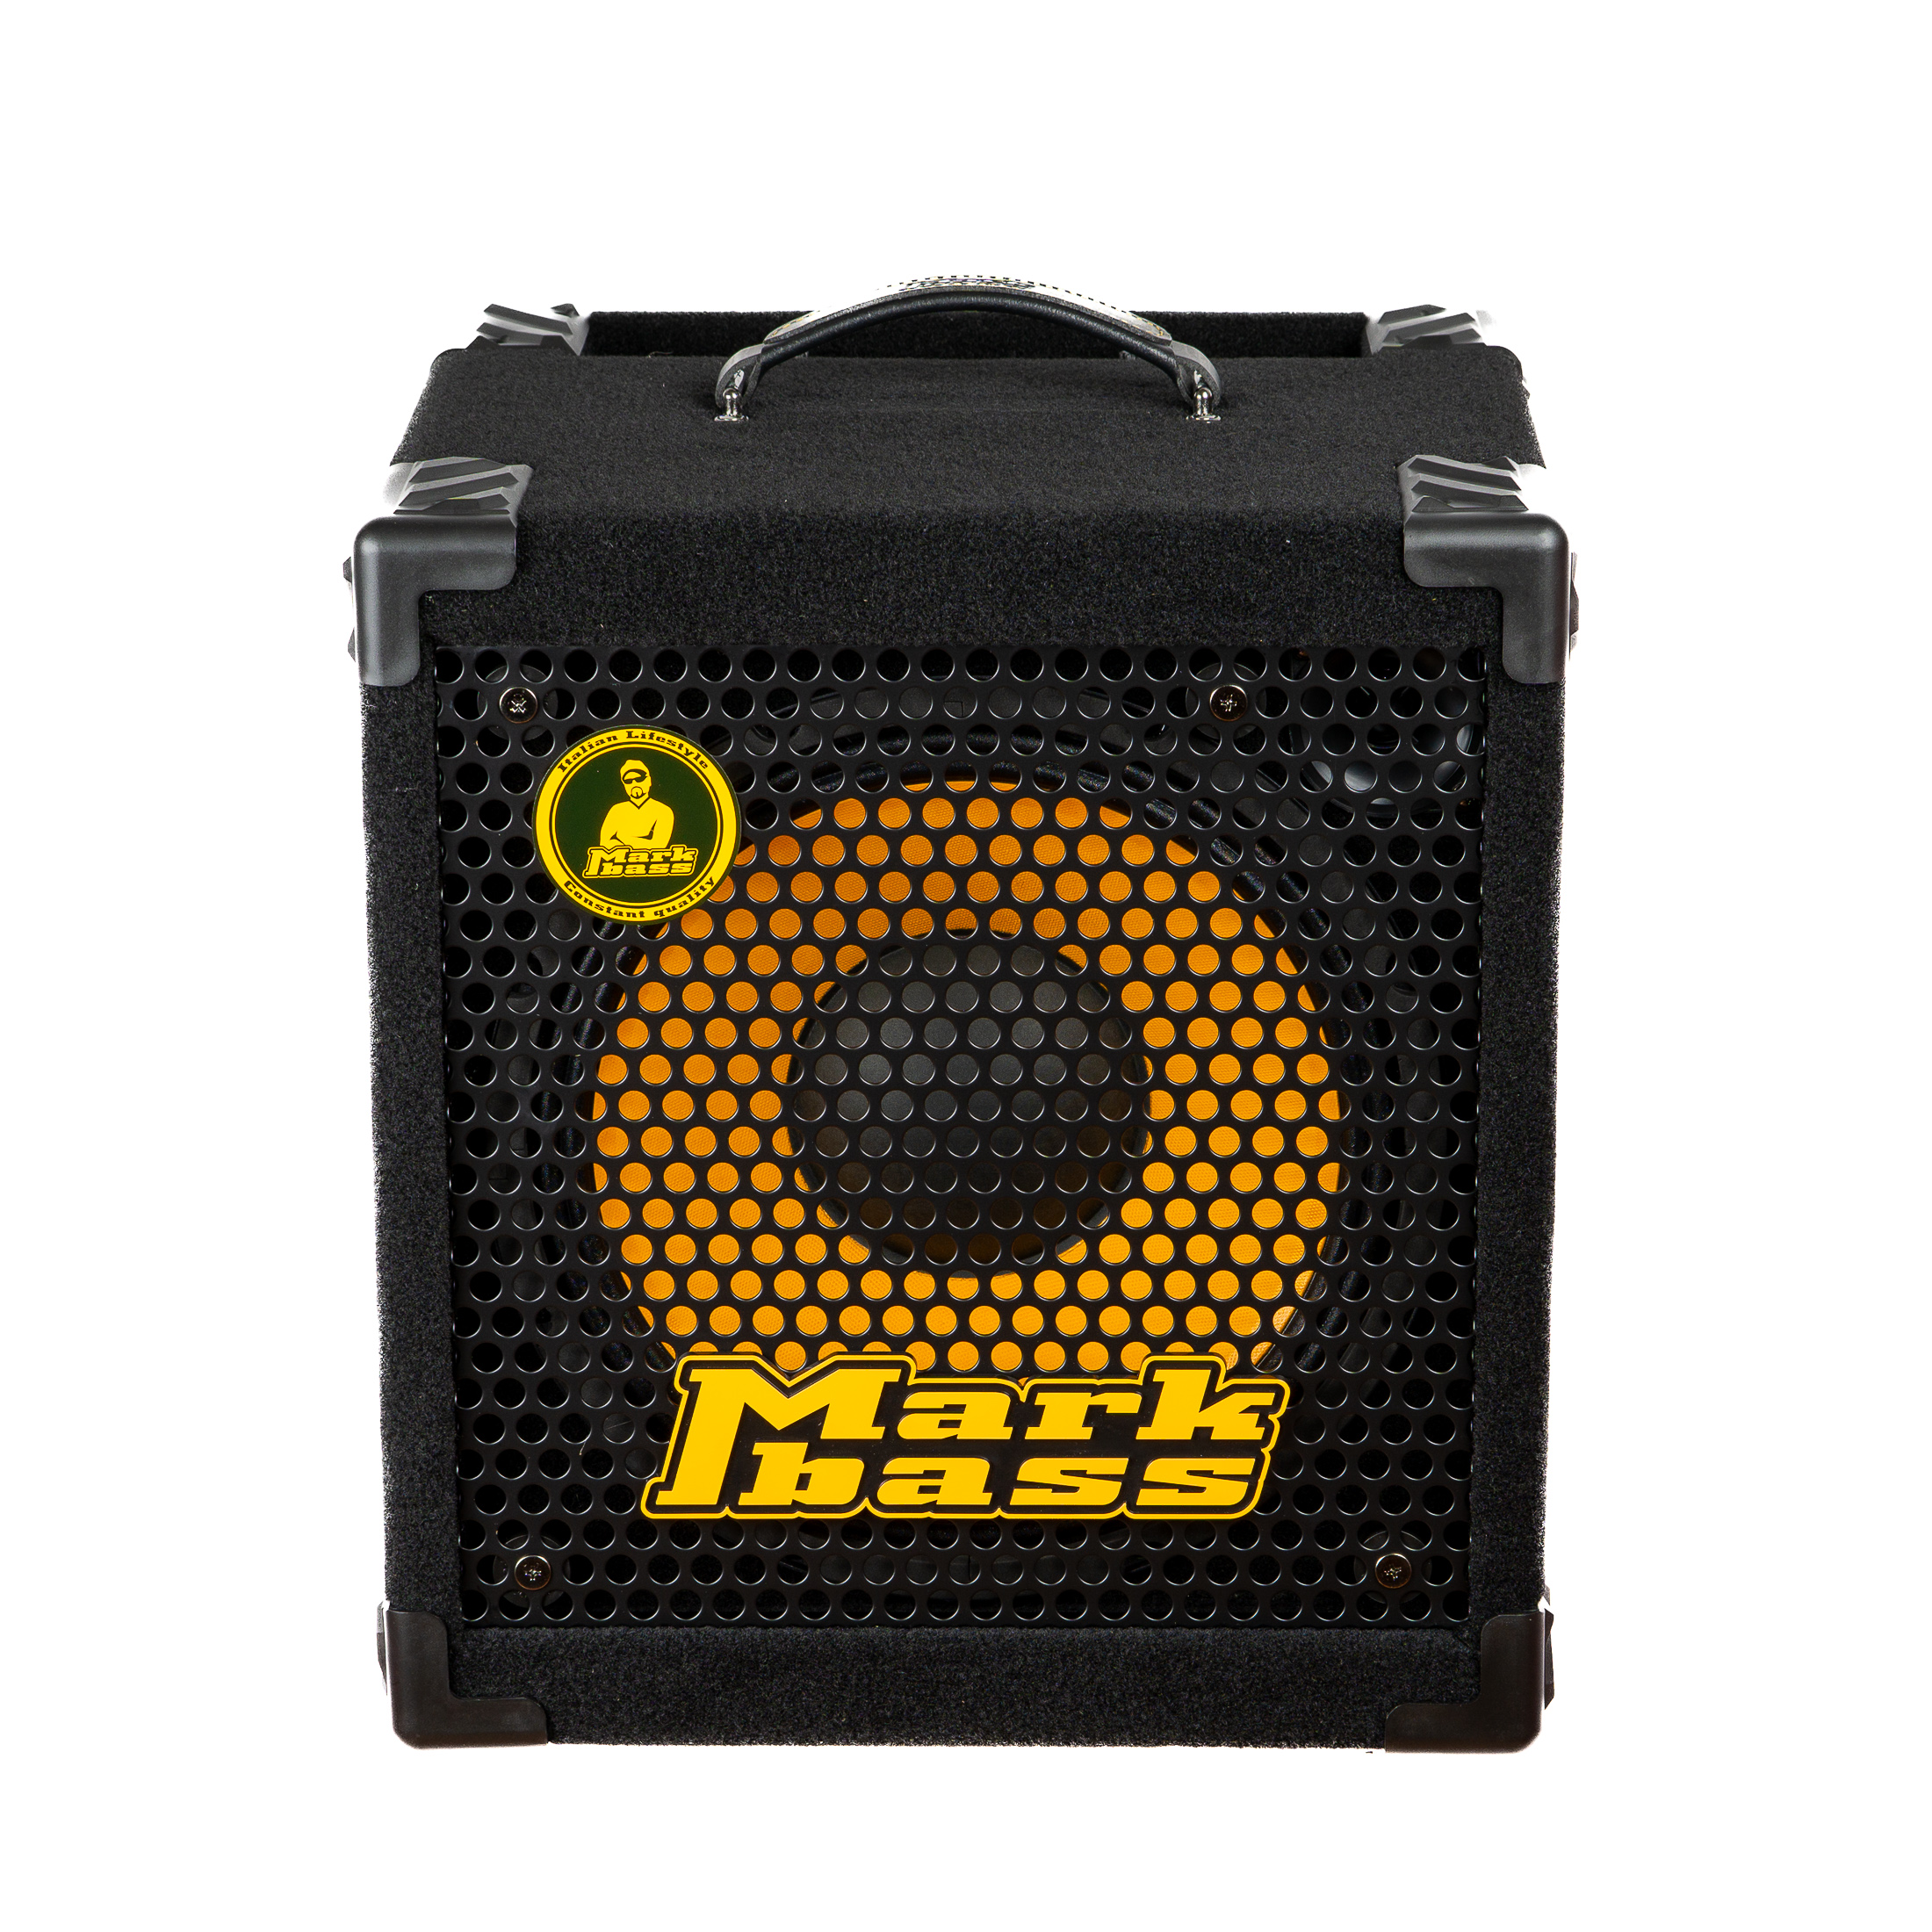 Markbass Mini Cmd 121 P V Piezo 1x12 500w Black - Bass combo amp - Variation 2